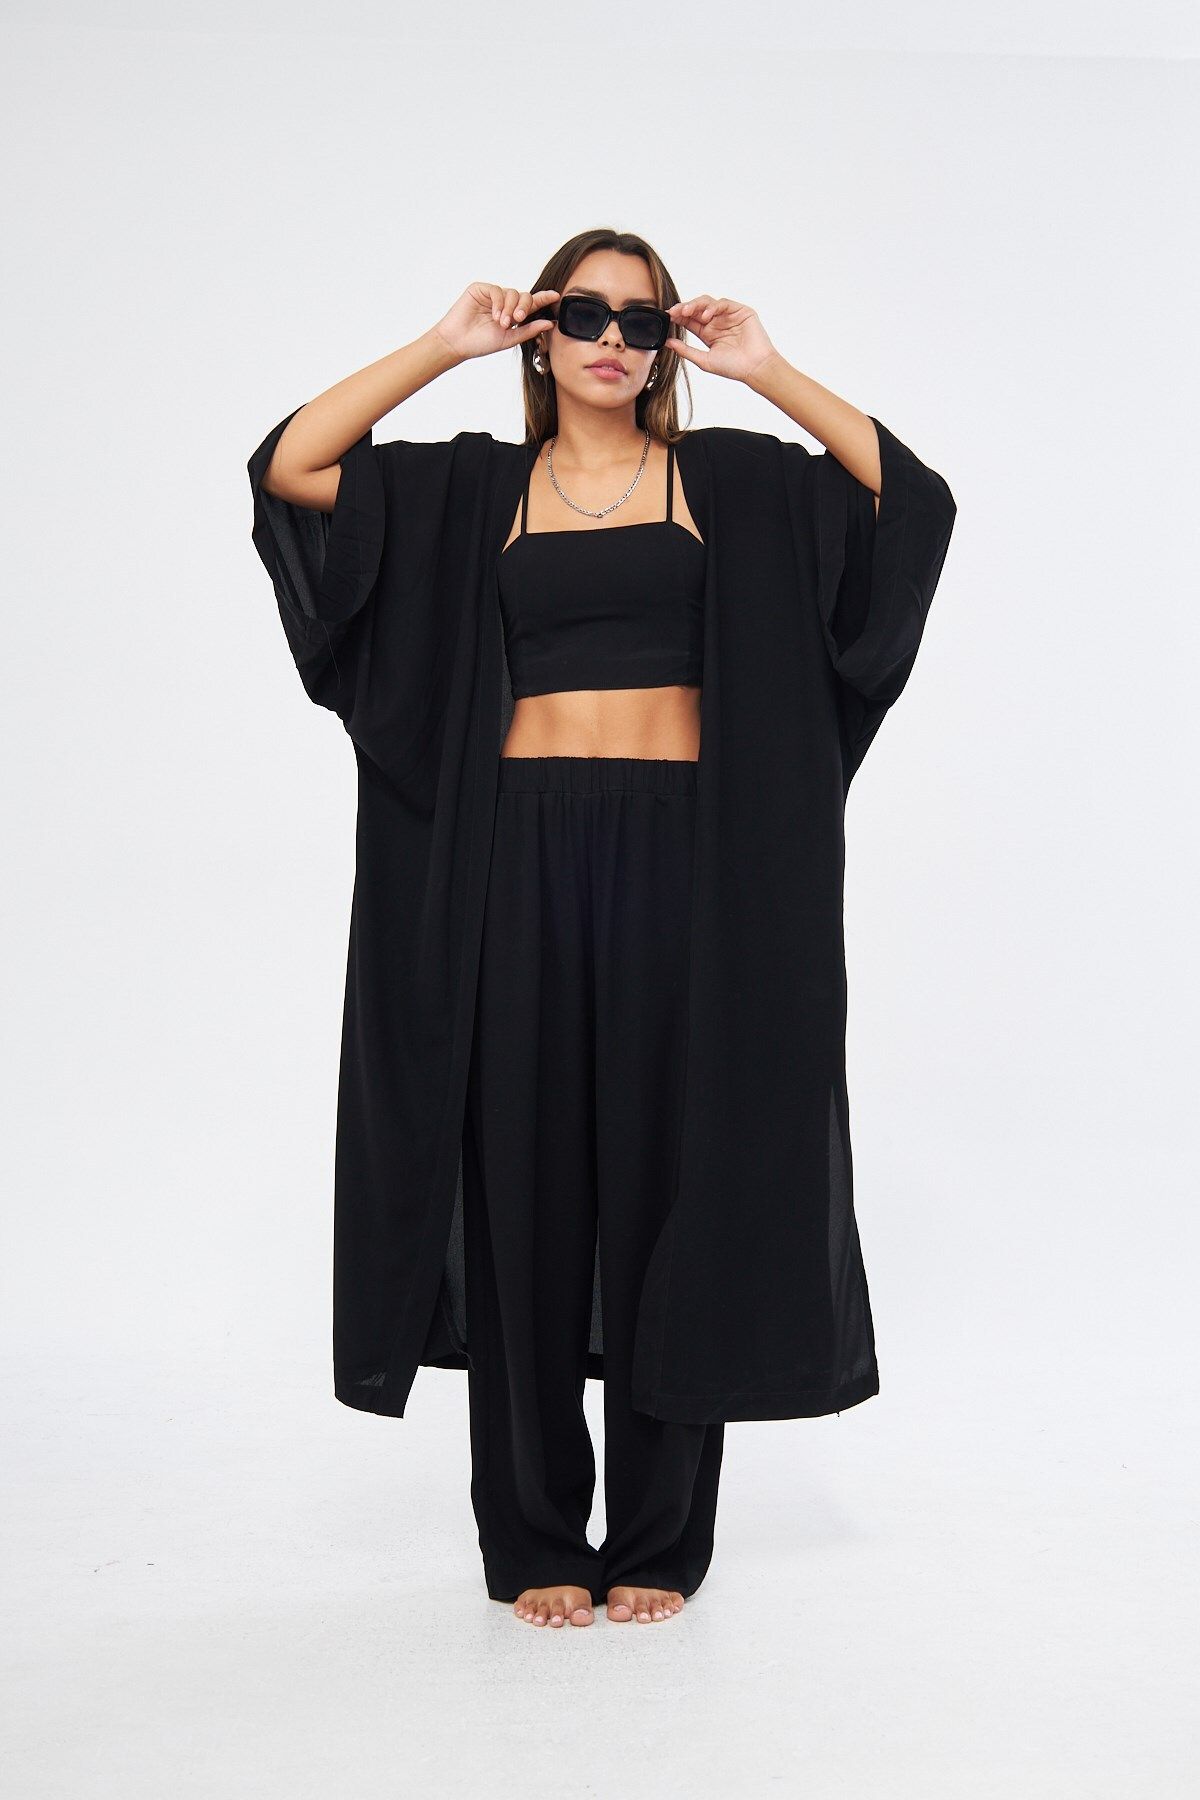 The Champ Clothing Kimono 3 Parça Büstiyerli Siyah Renk Alt-Üst Takım